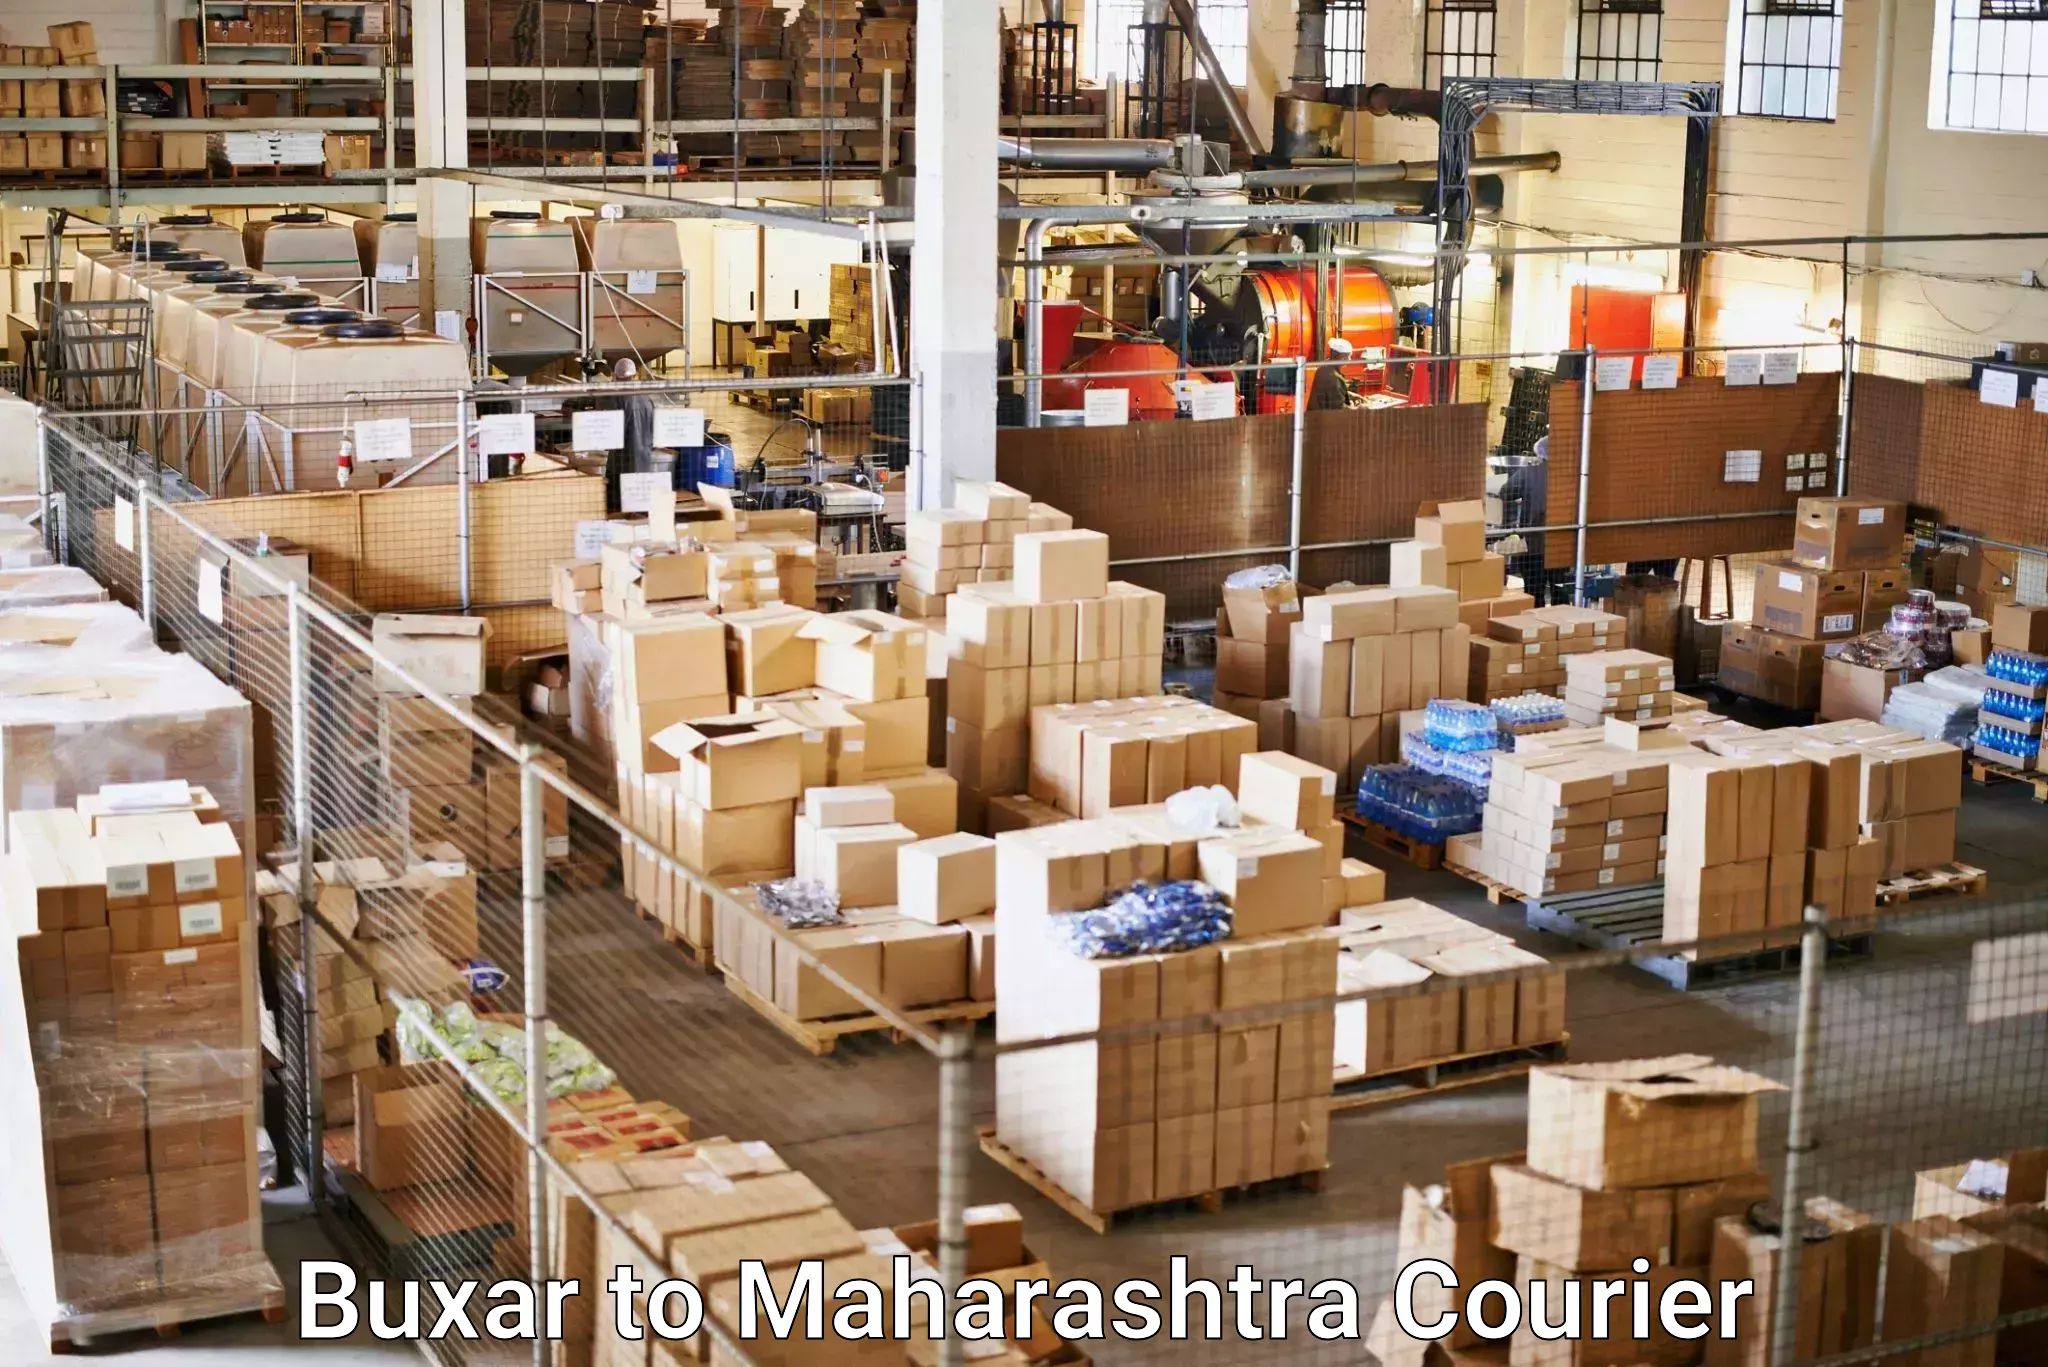 Digital courier platforms Buxar to Mumbai Port